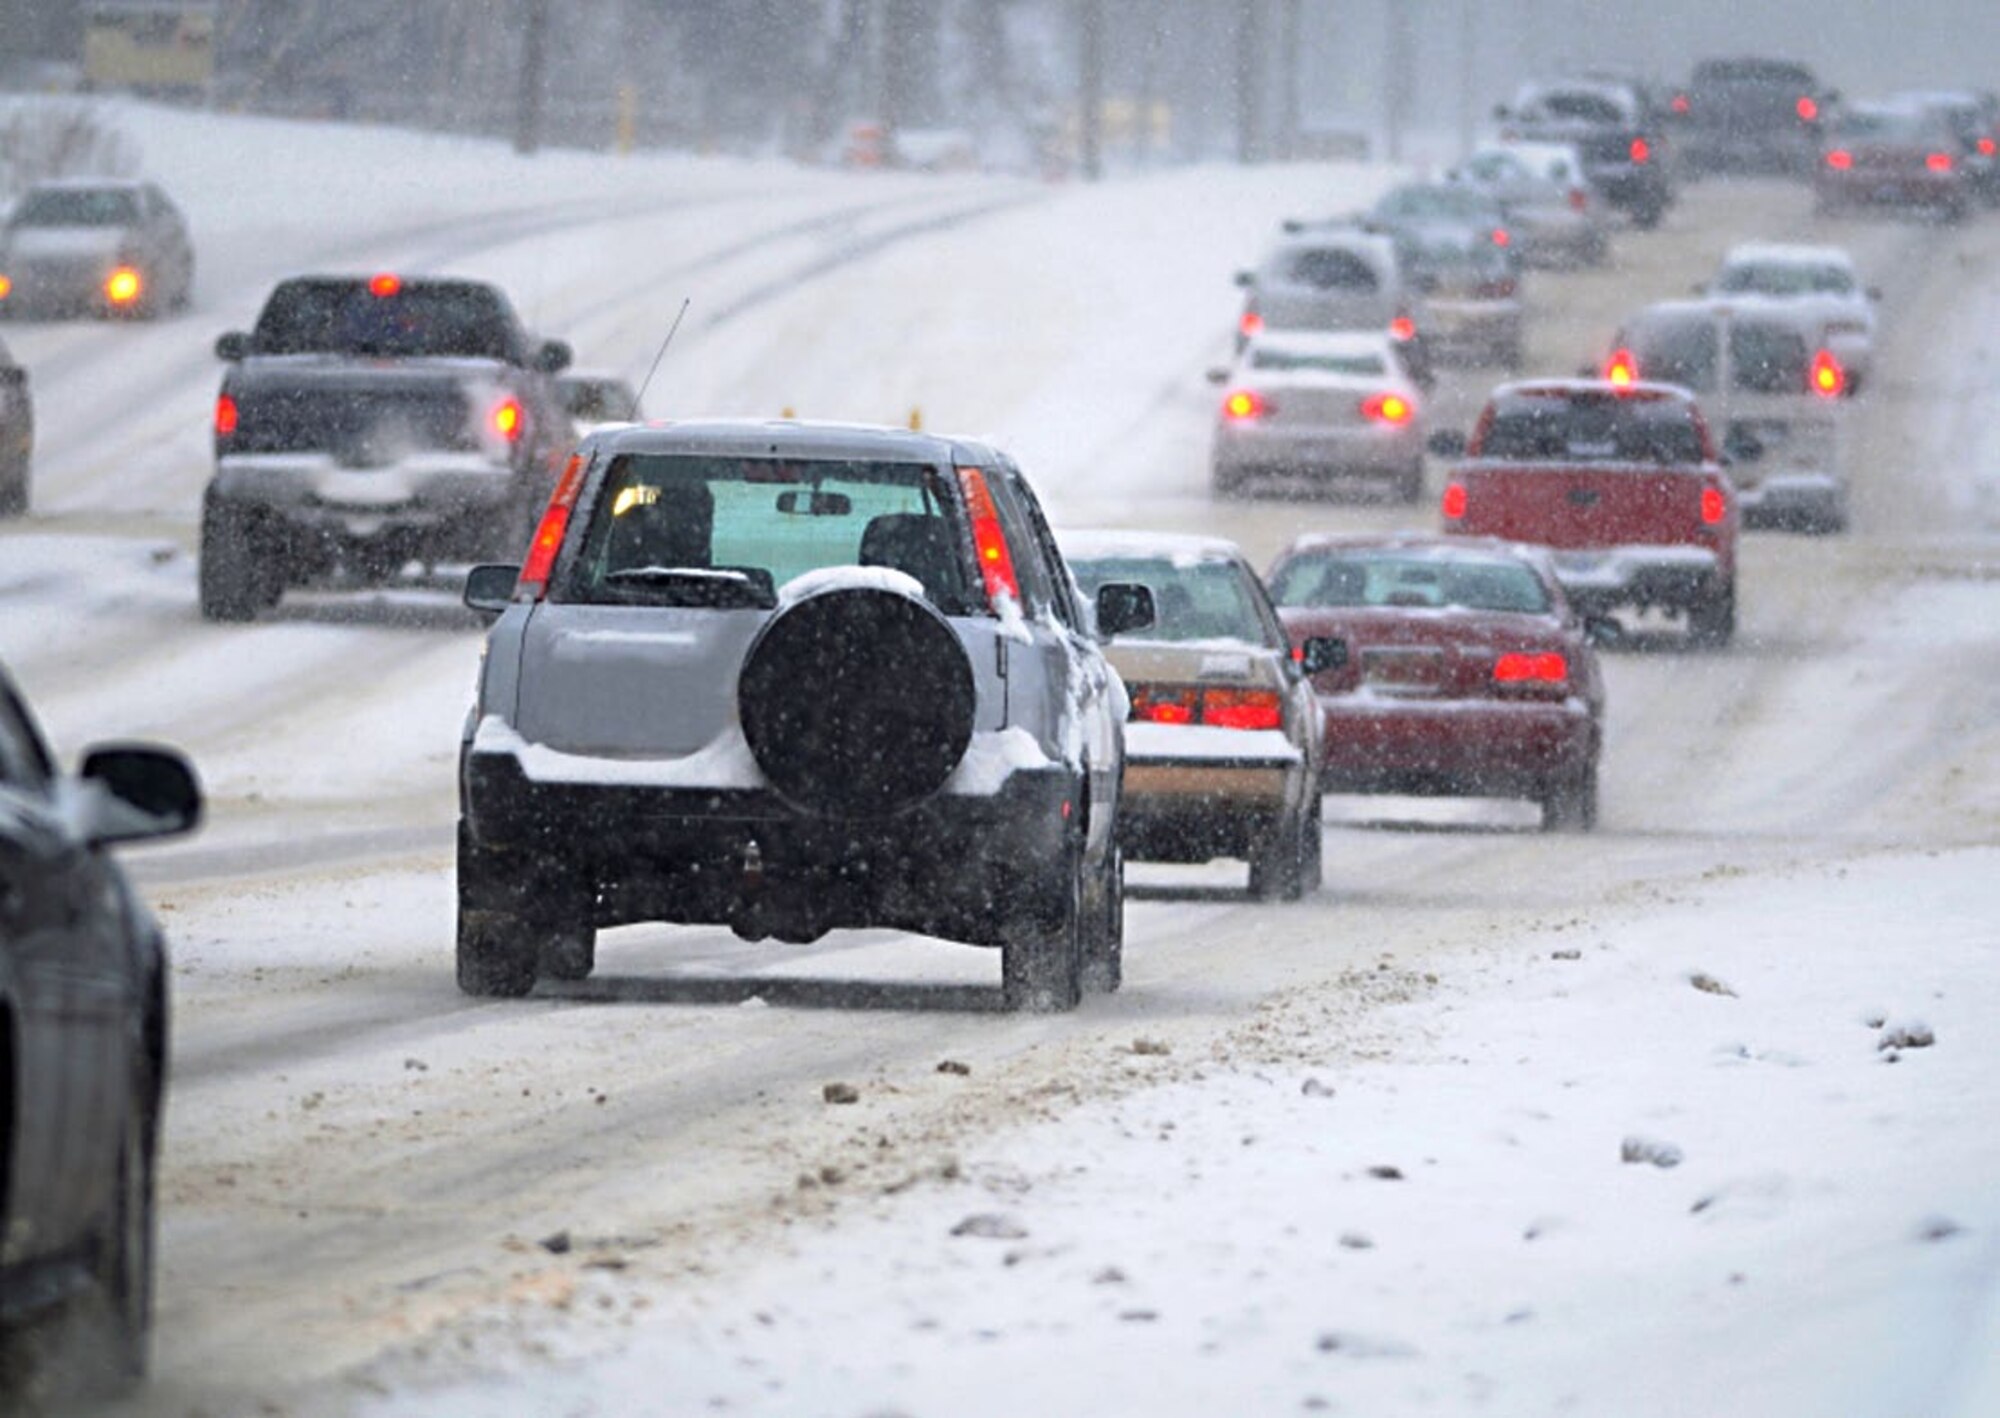 Winterizing your car, vehicle safety